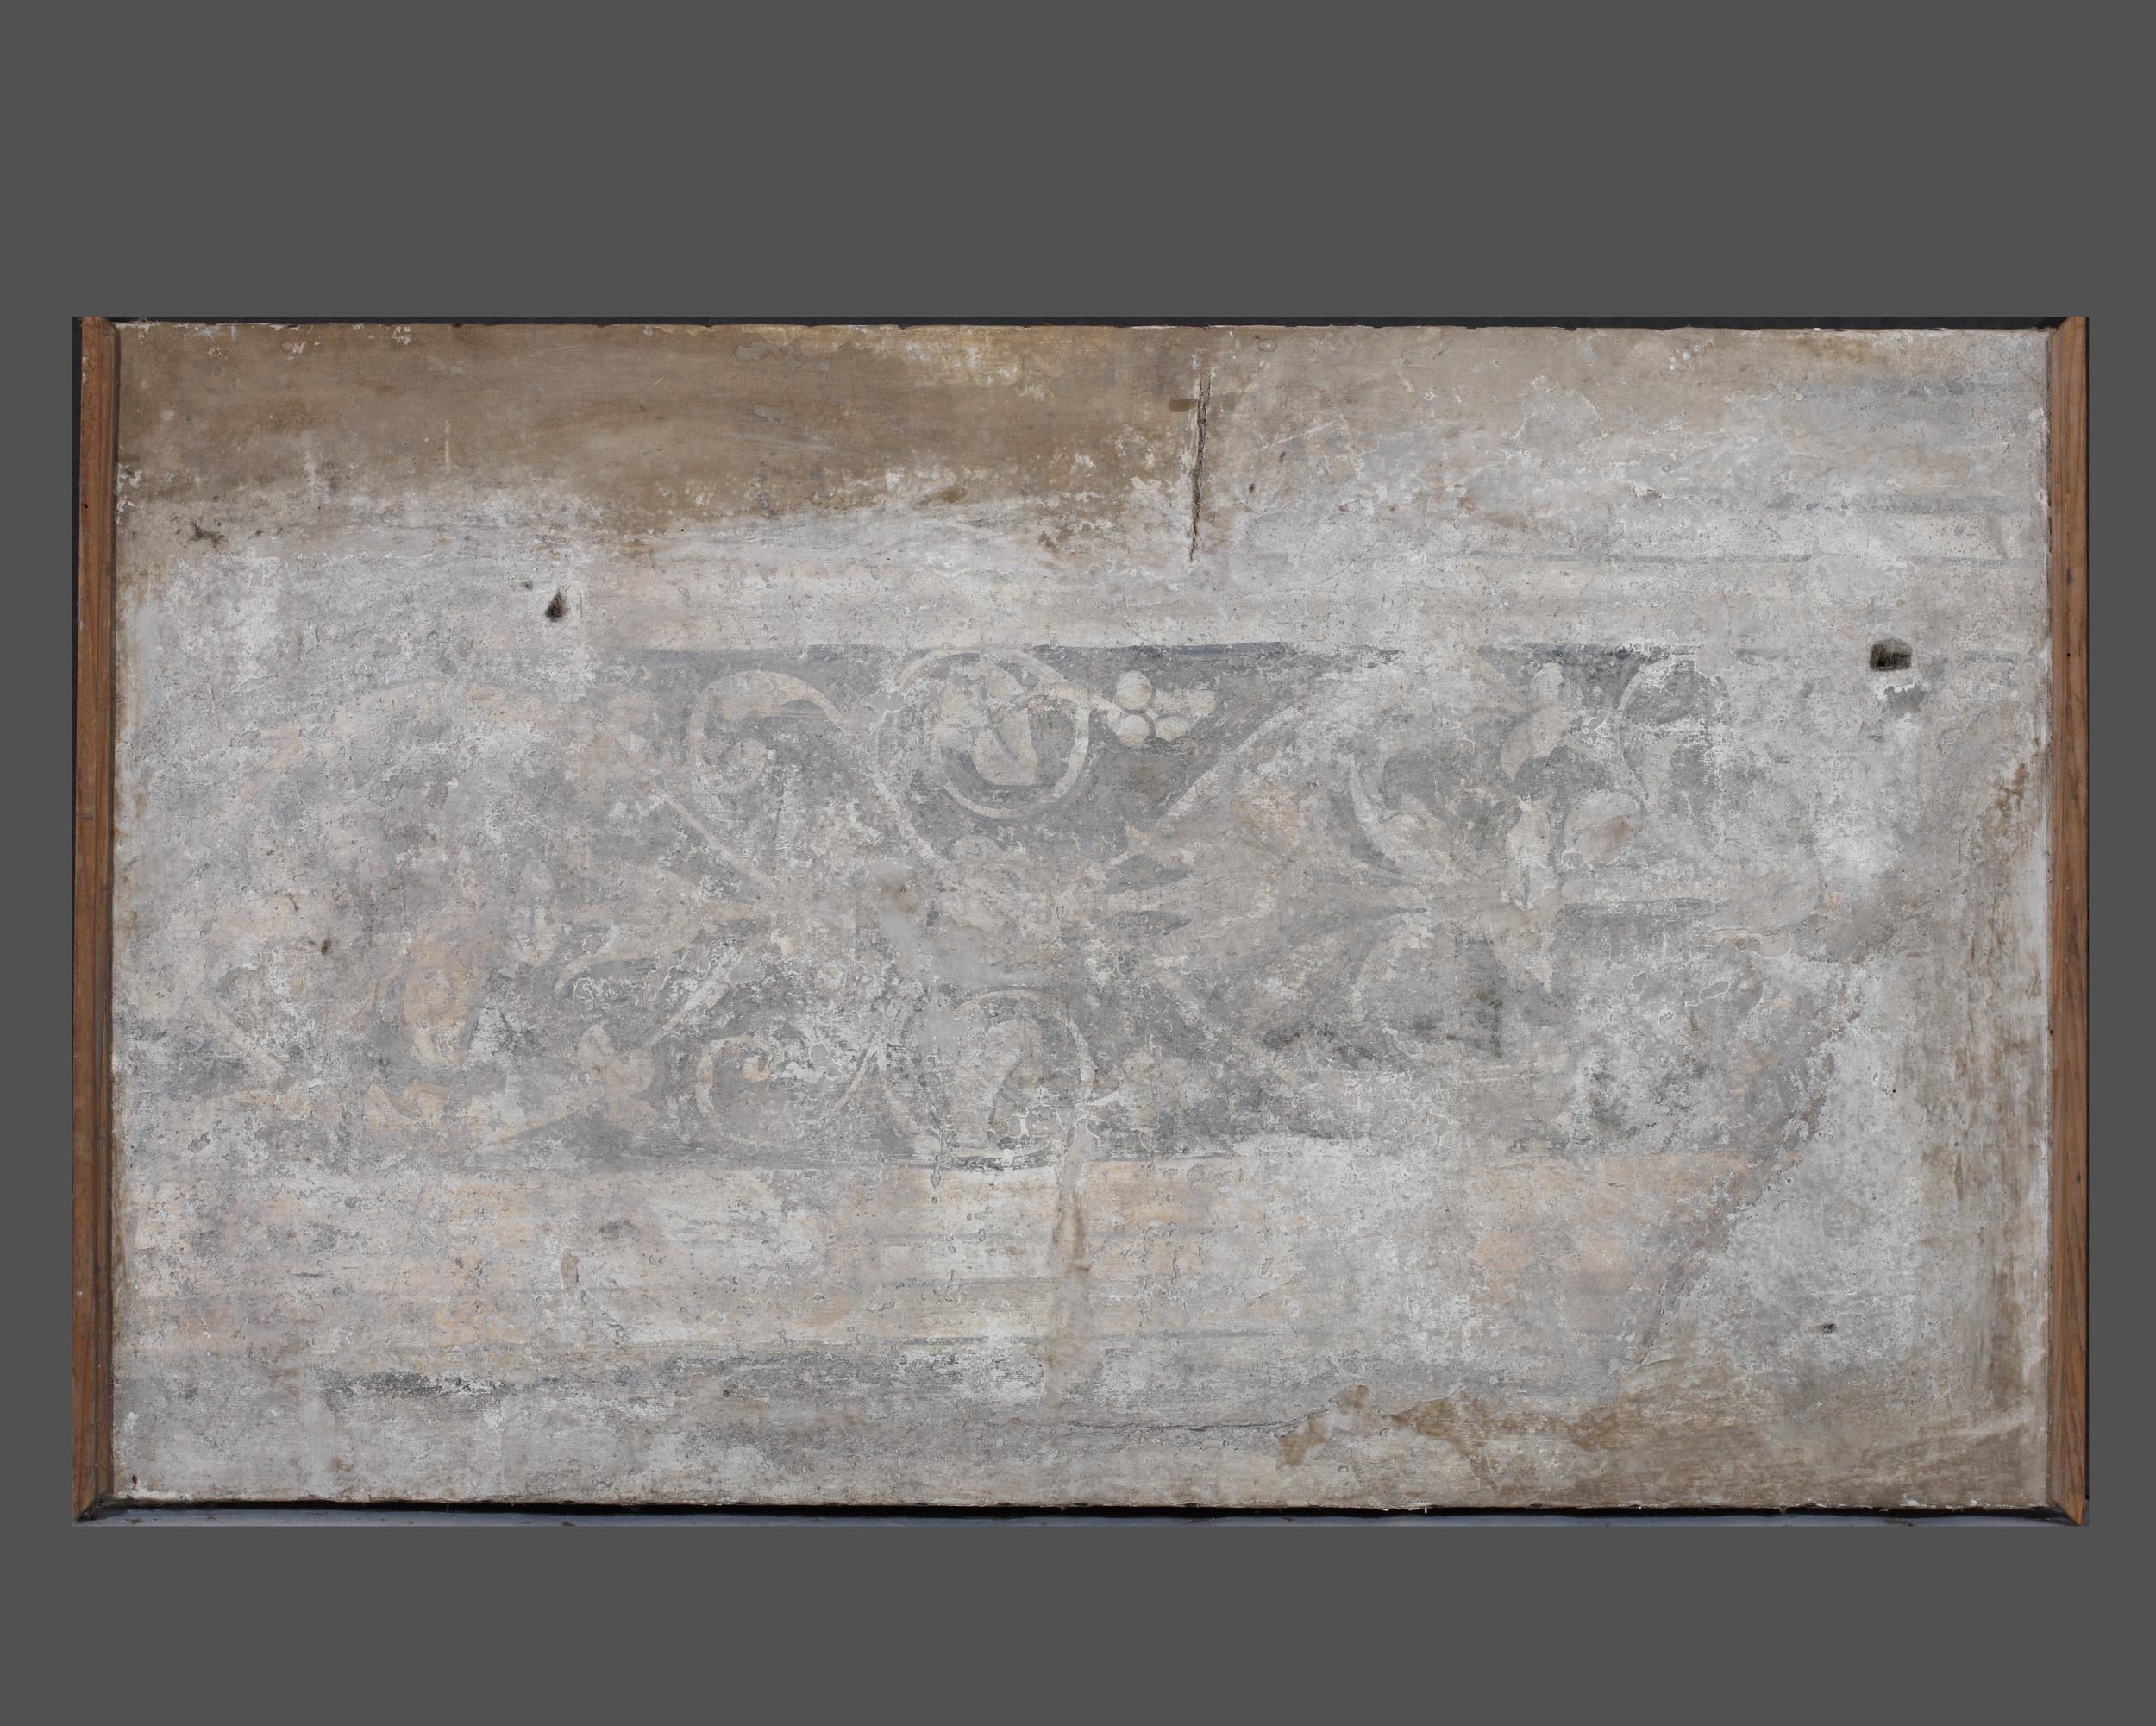 lesena (dipinto, opera isolata) - ambito mantovano (secc. XV/ XVI)